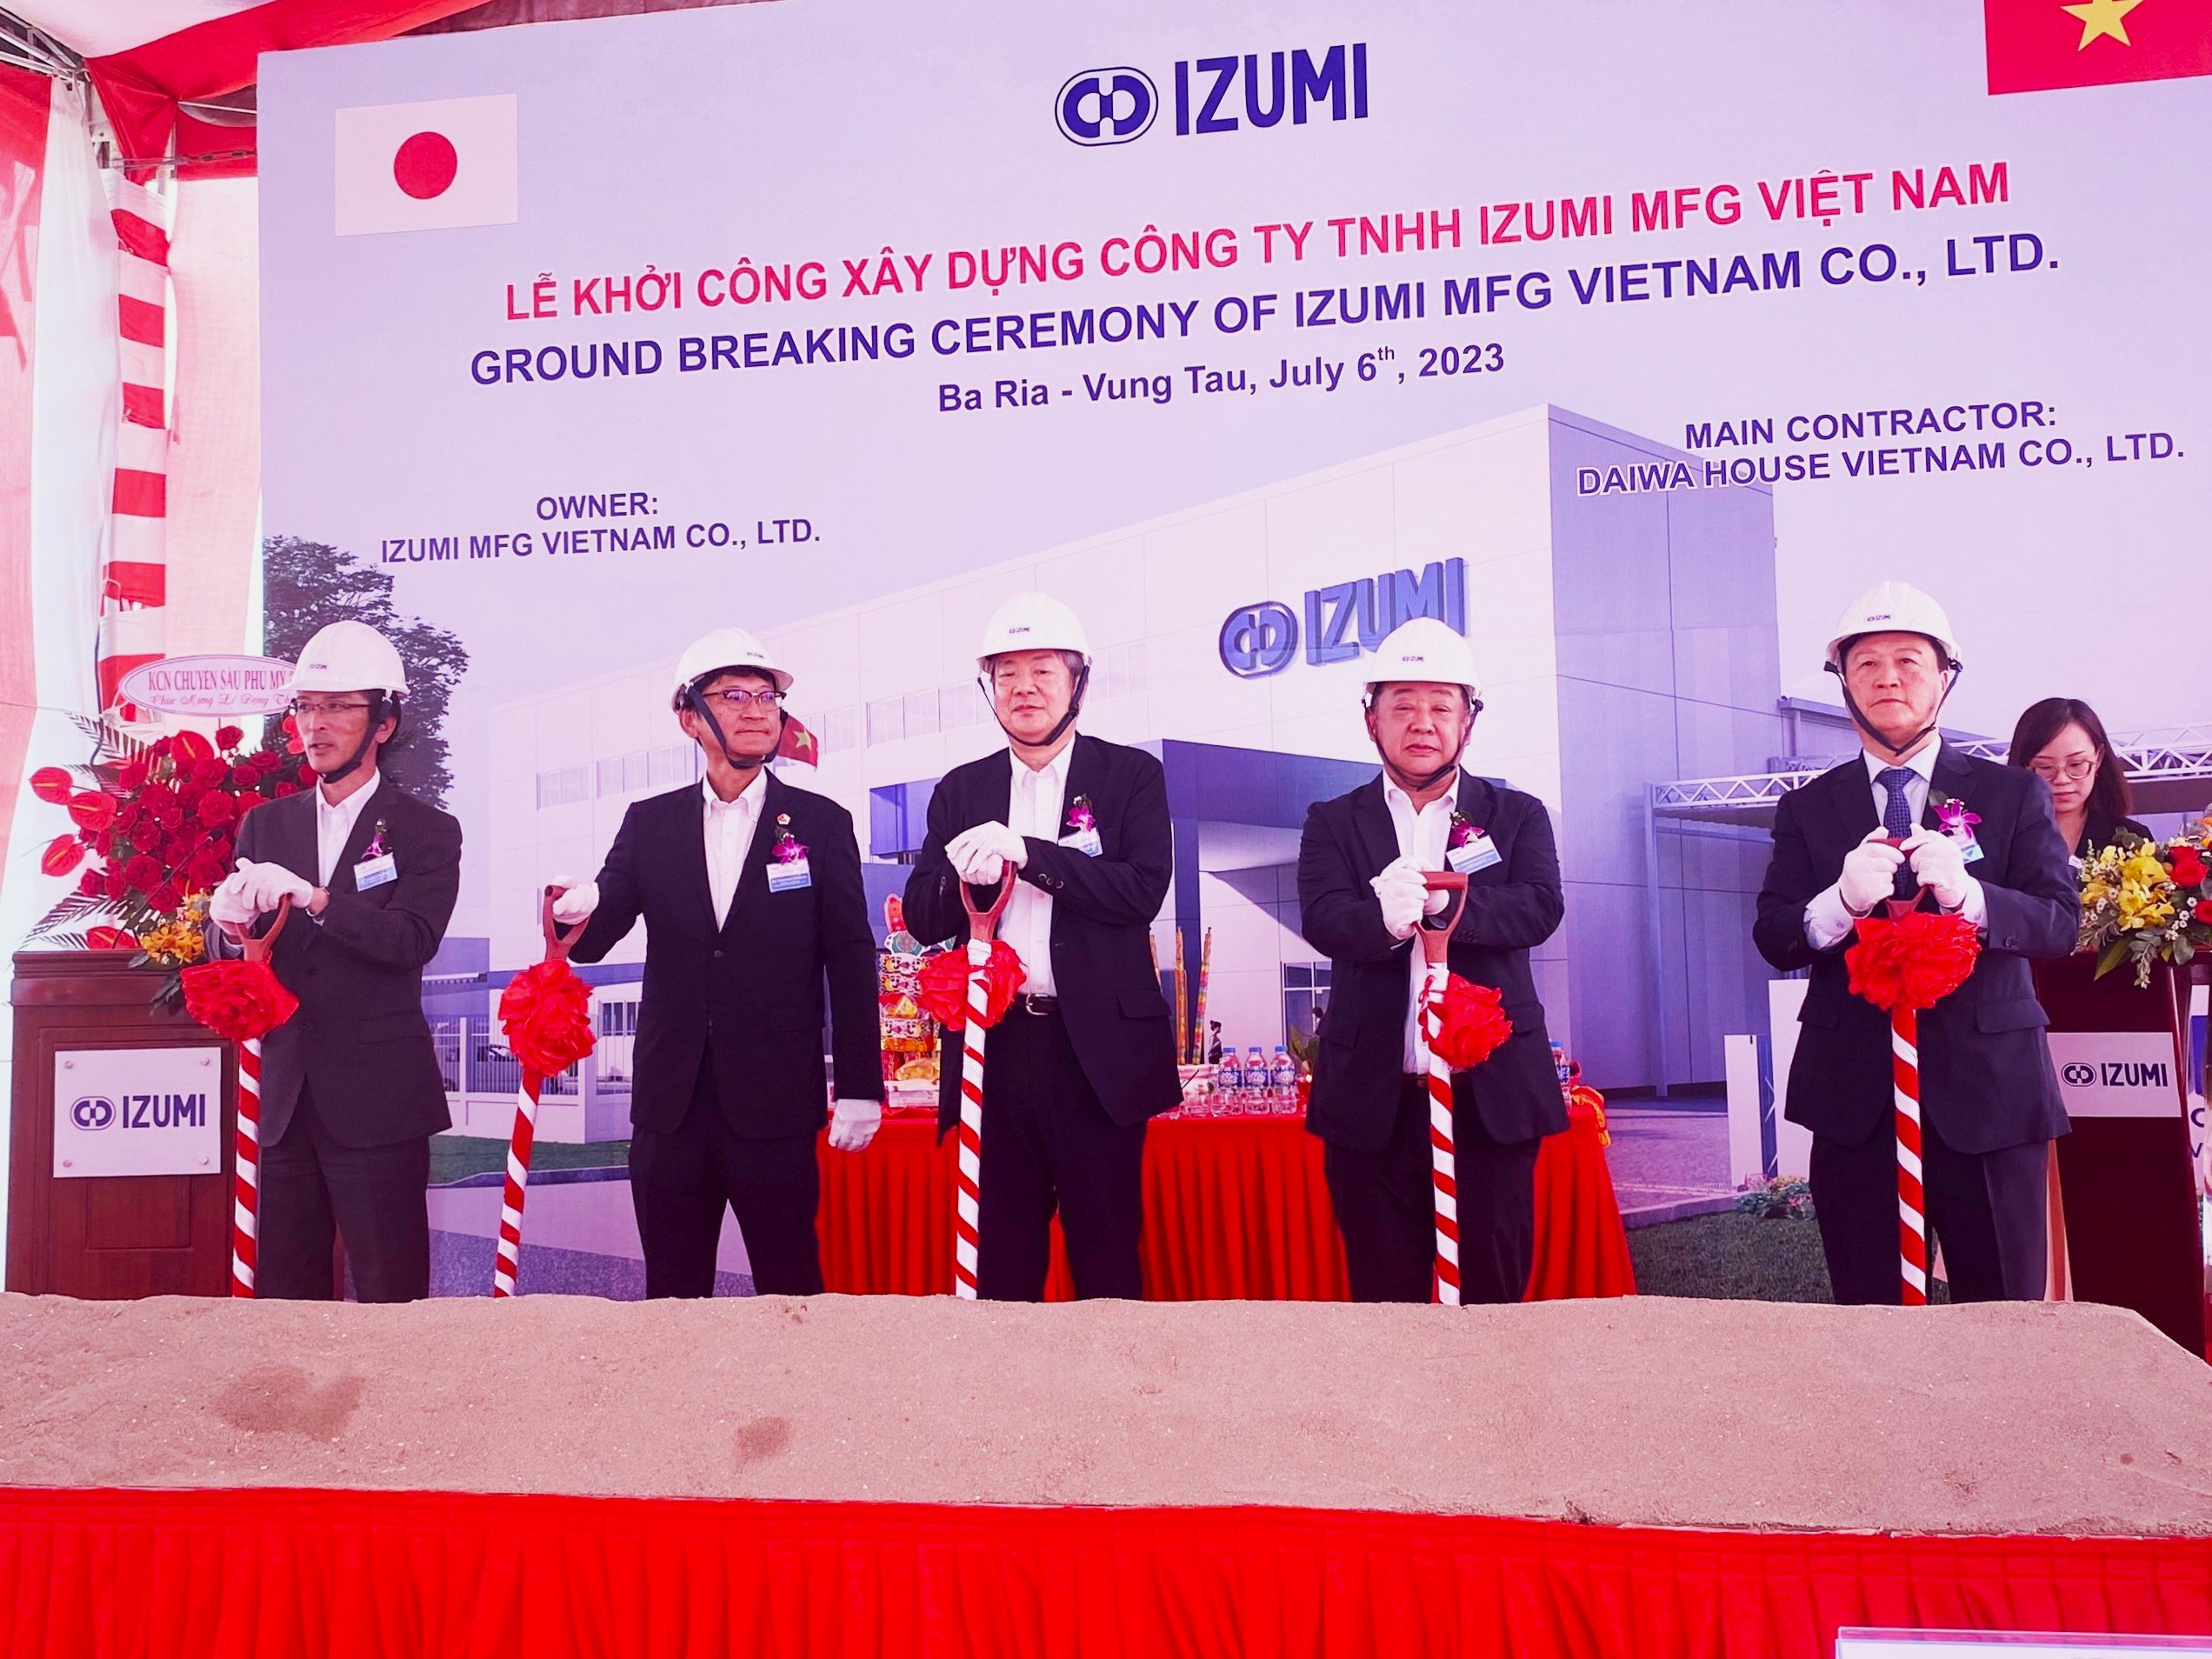 The groundbreaking ceremony of Izumi MFG Vietnam Co., Ltd.